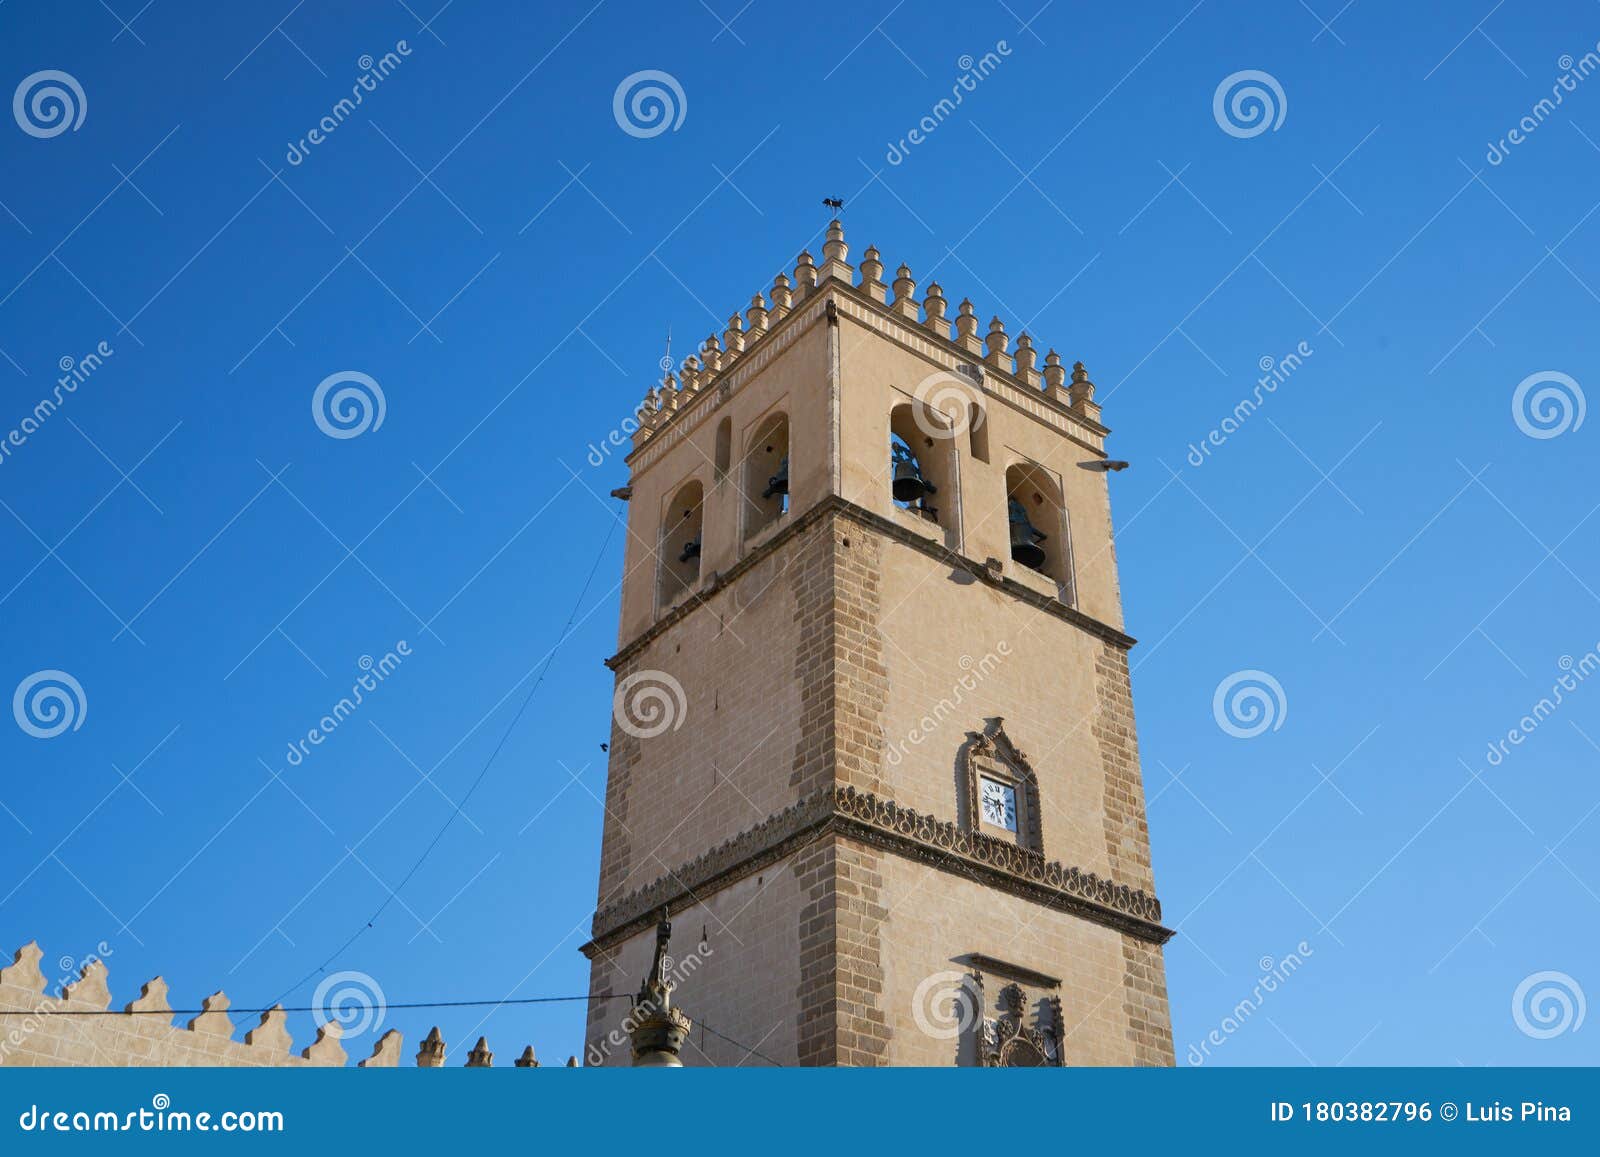 san juan batista church cathedral tower in badajoz, spain